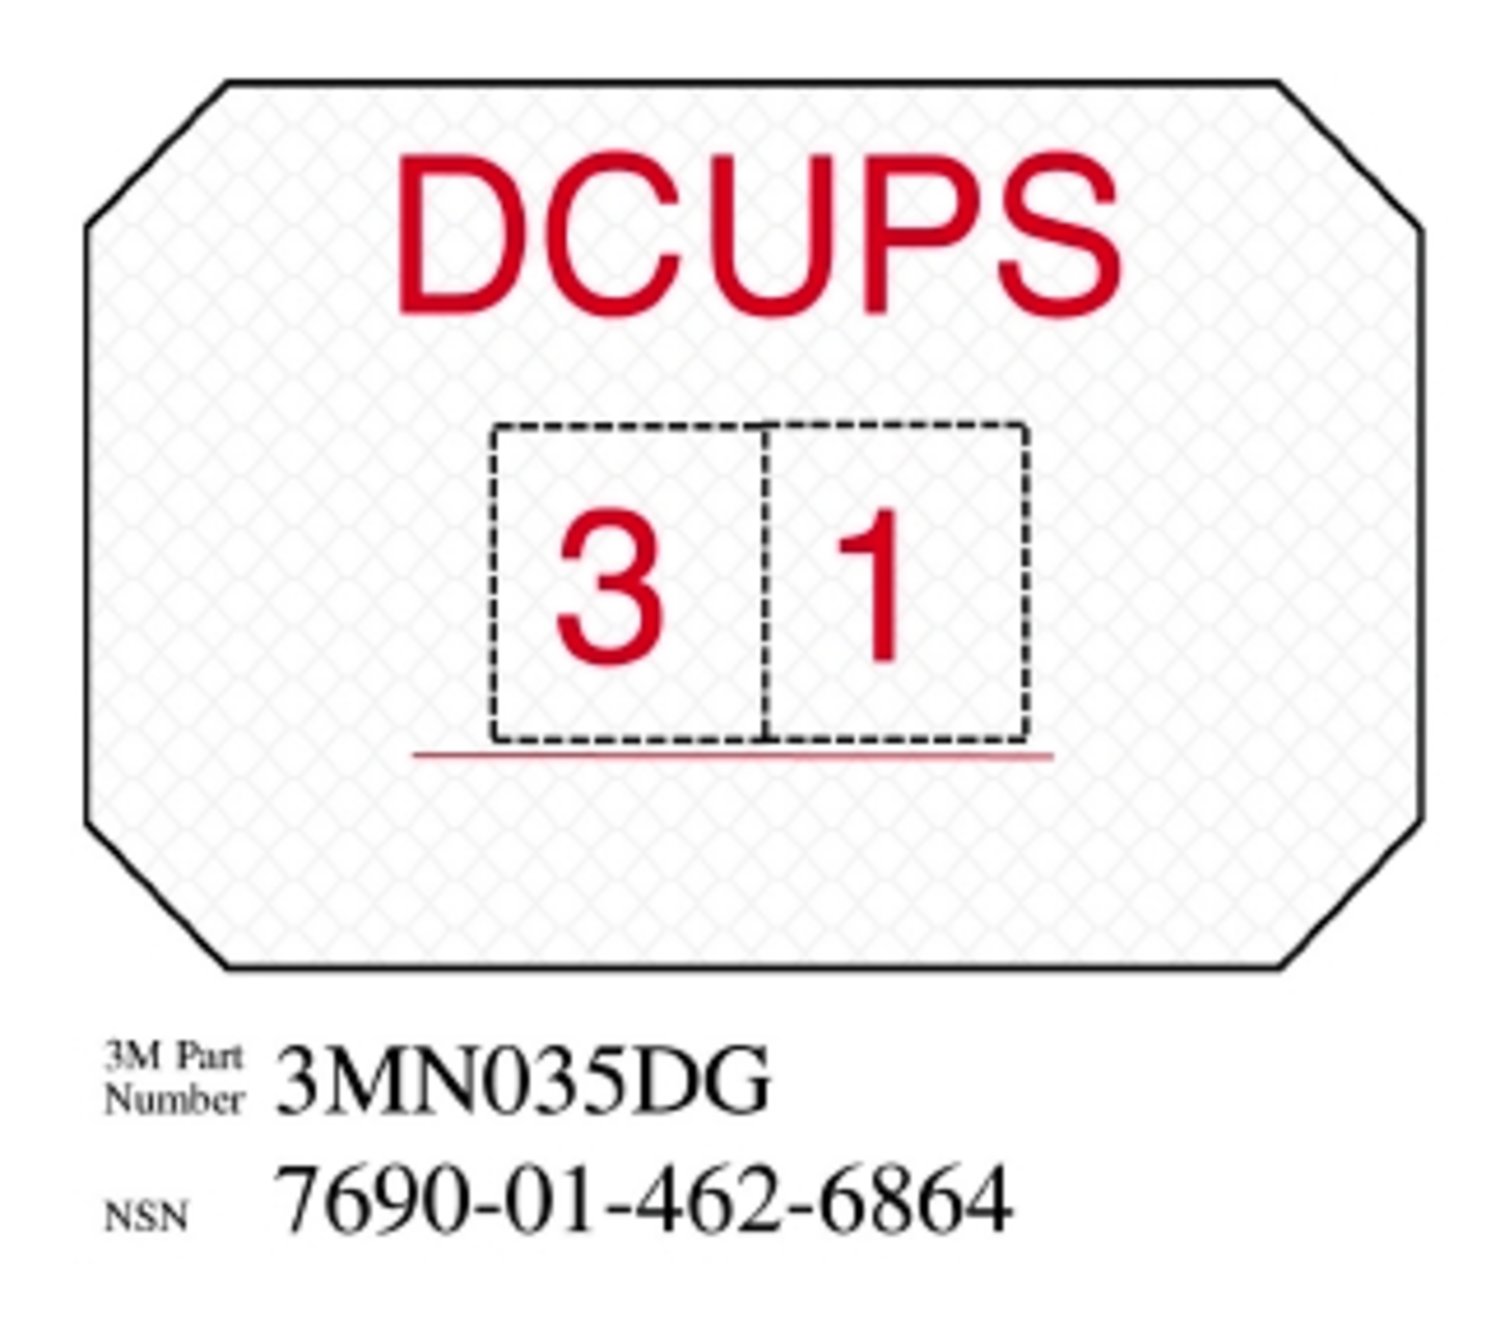 7010317676 - 3M Diamond Grade Damage Control Sign 3MN035DG, "DCUPS", 8 in x 12 in,
10/Pkg